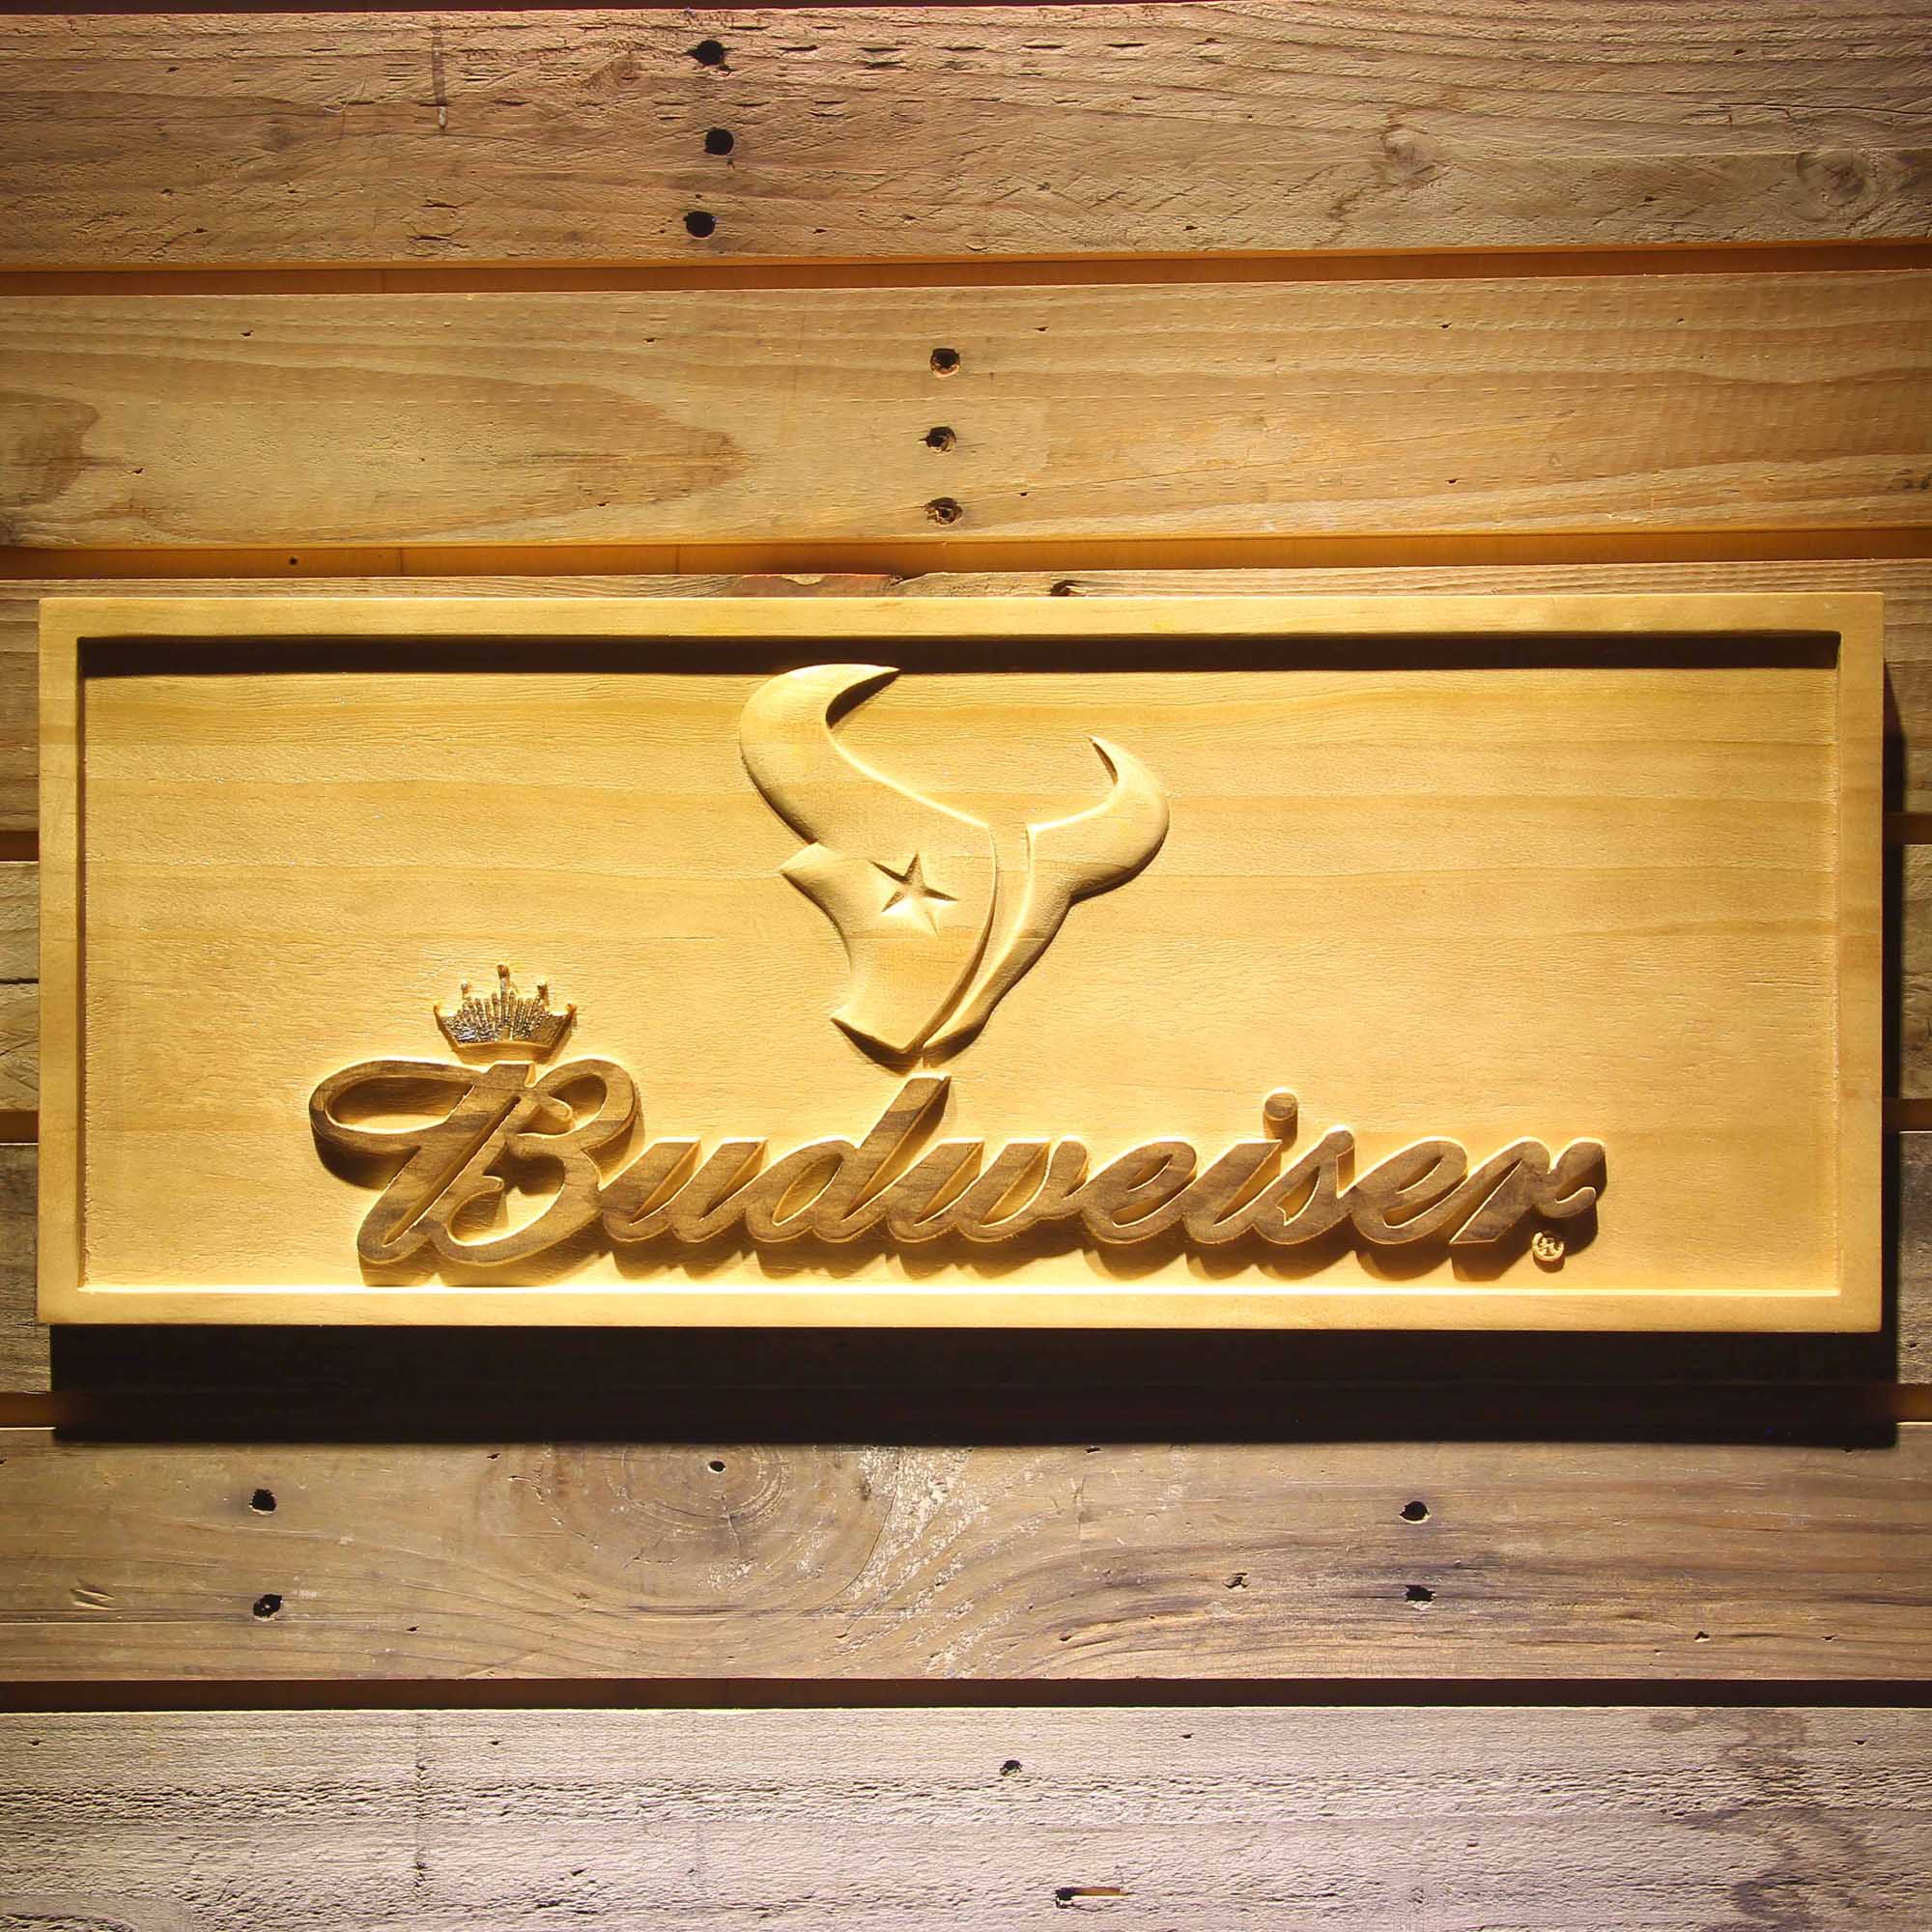 Houston Texans Budweiser 3D Wooden Engrave Sign